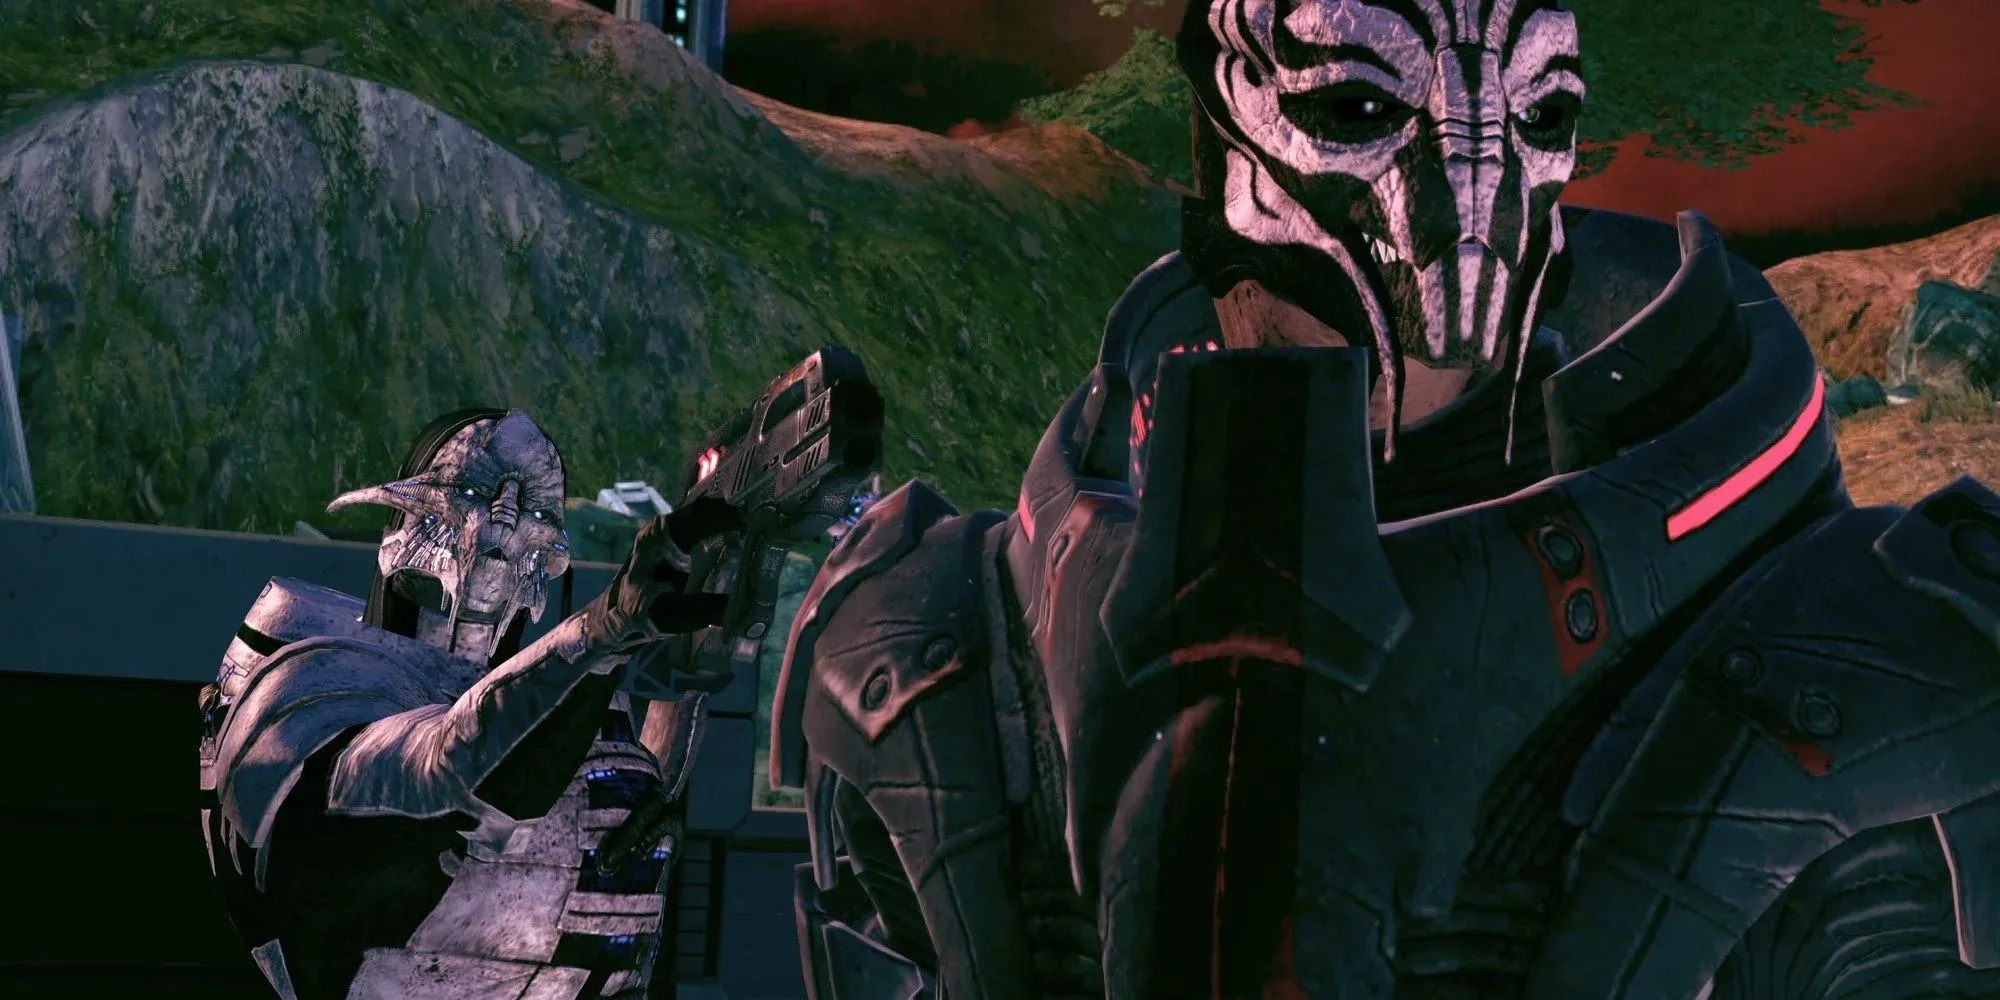 Saren Arterius Is The Best Villain In Mass Effect